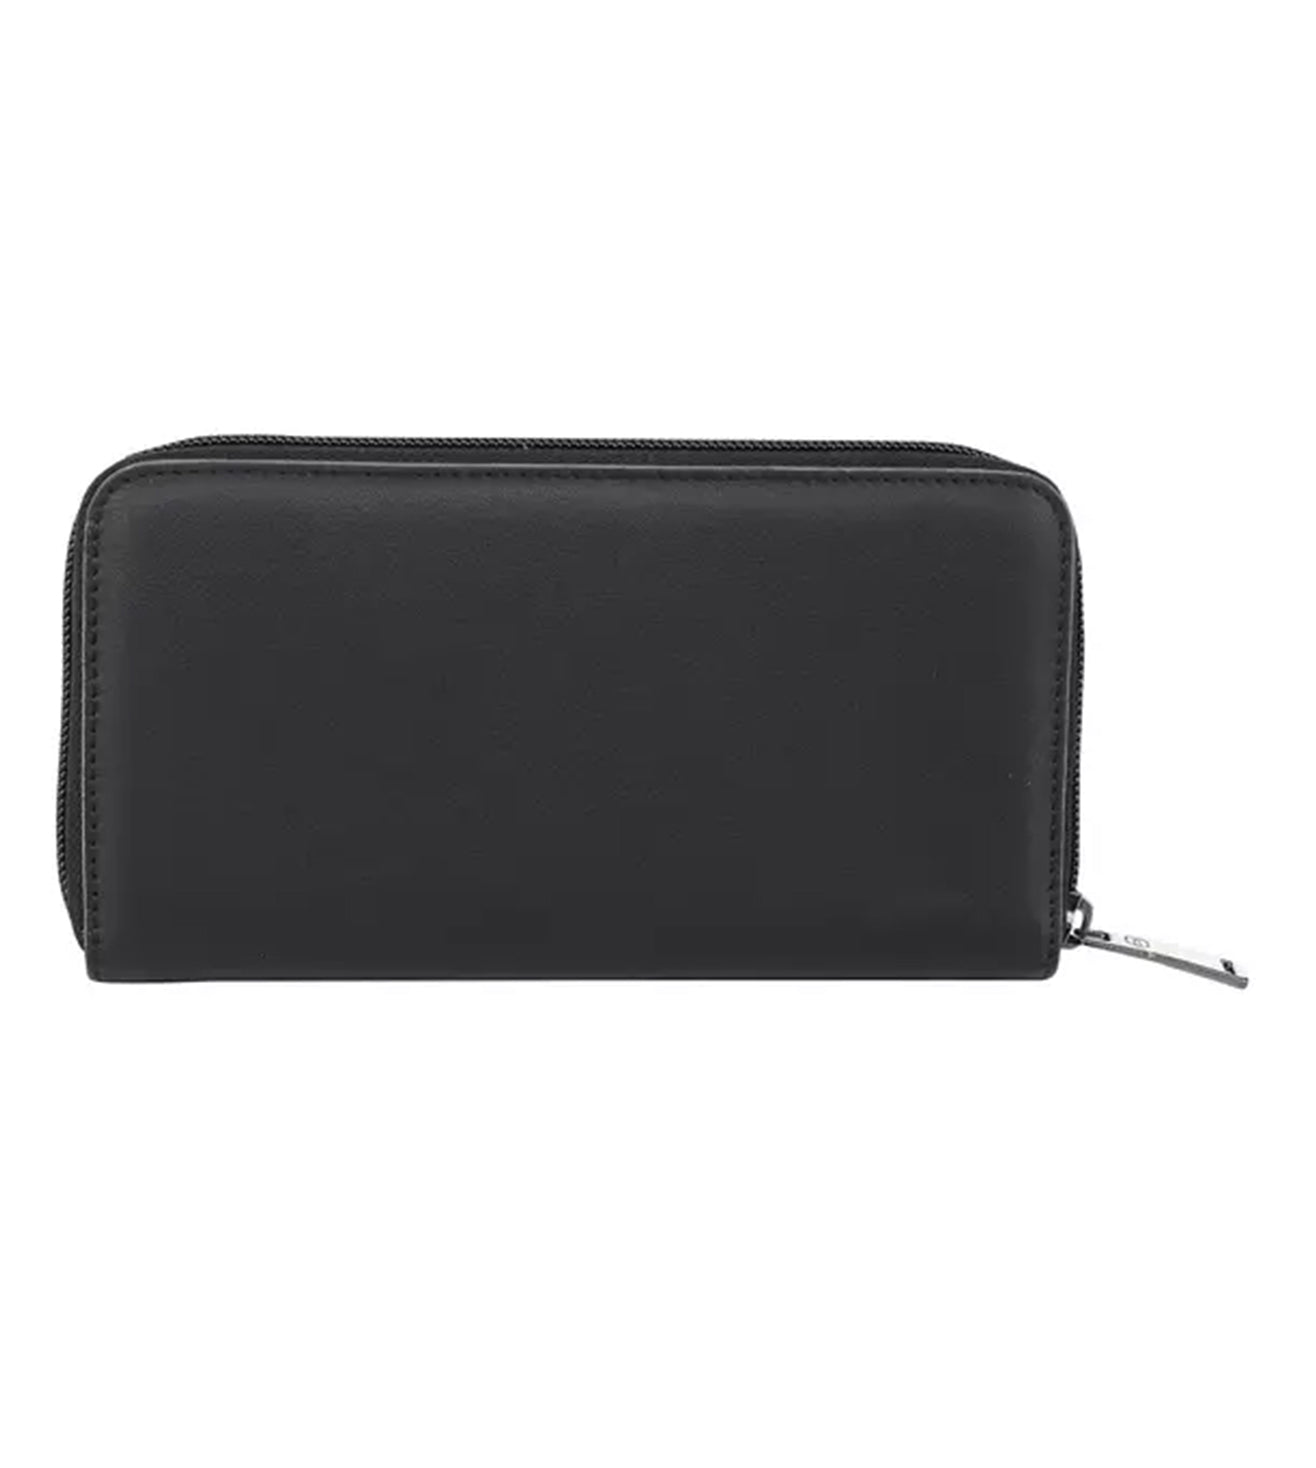 Piquadro David Men's Leather Wallet With Zipper